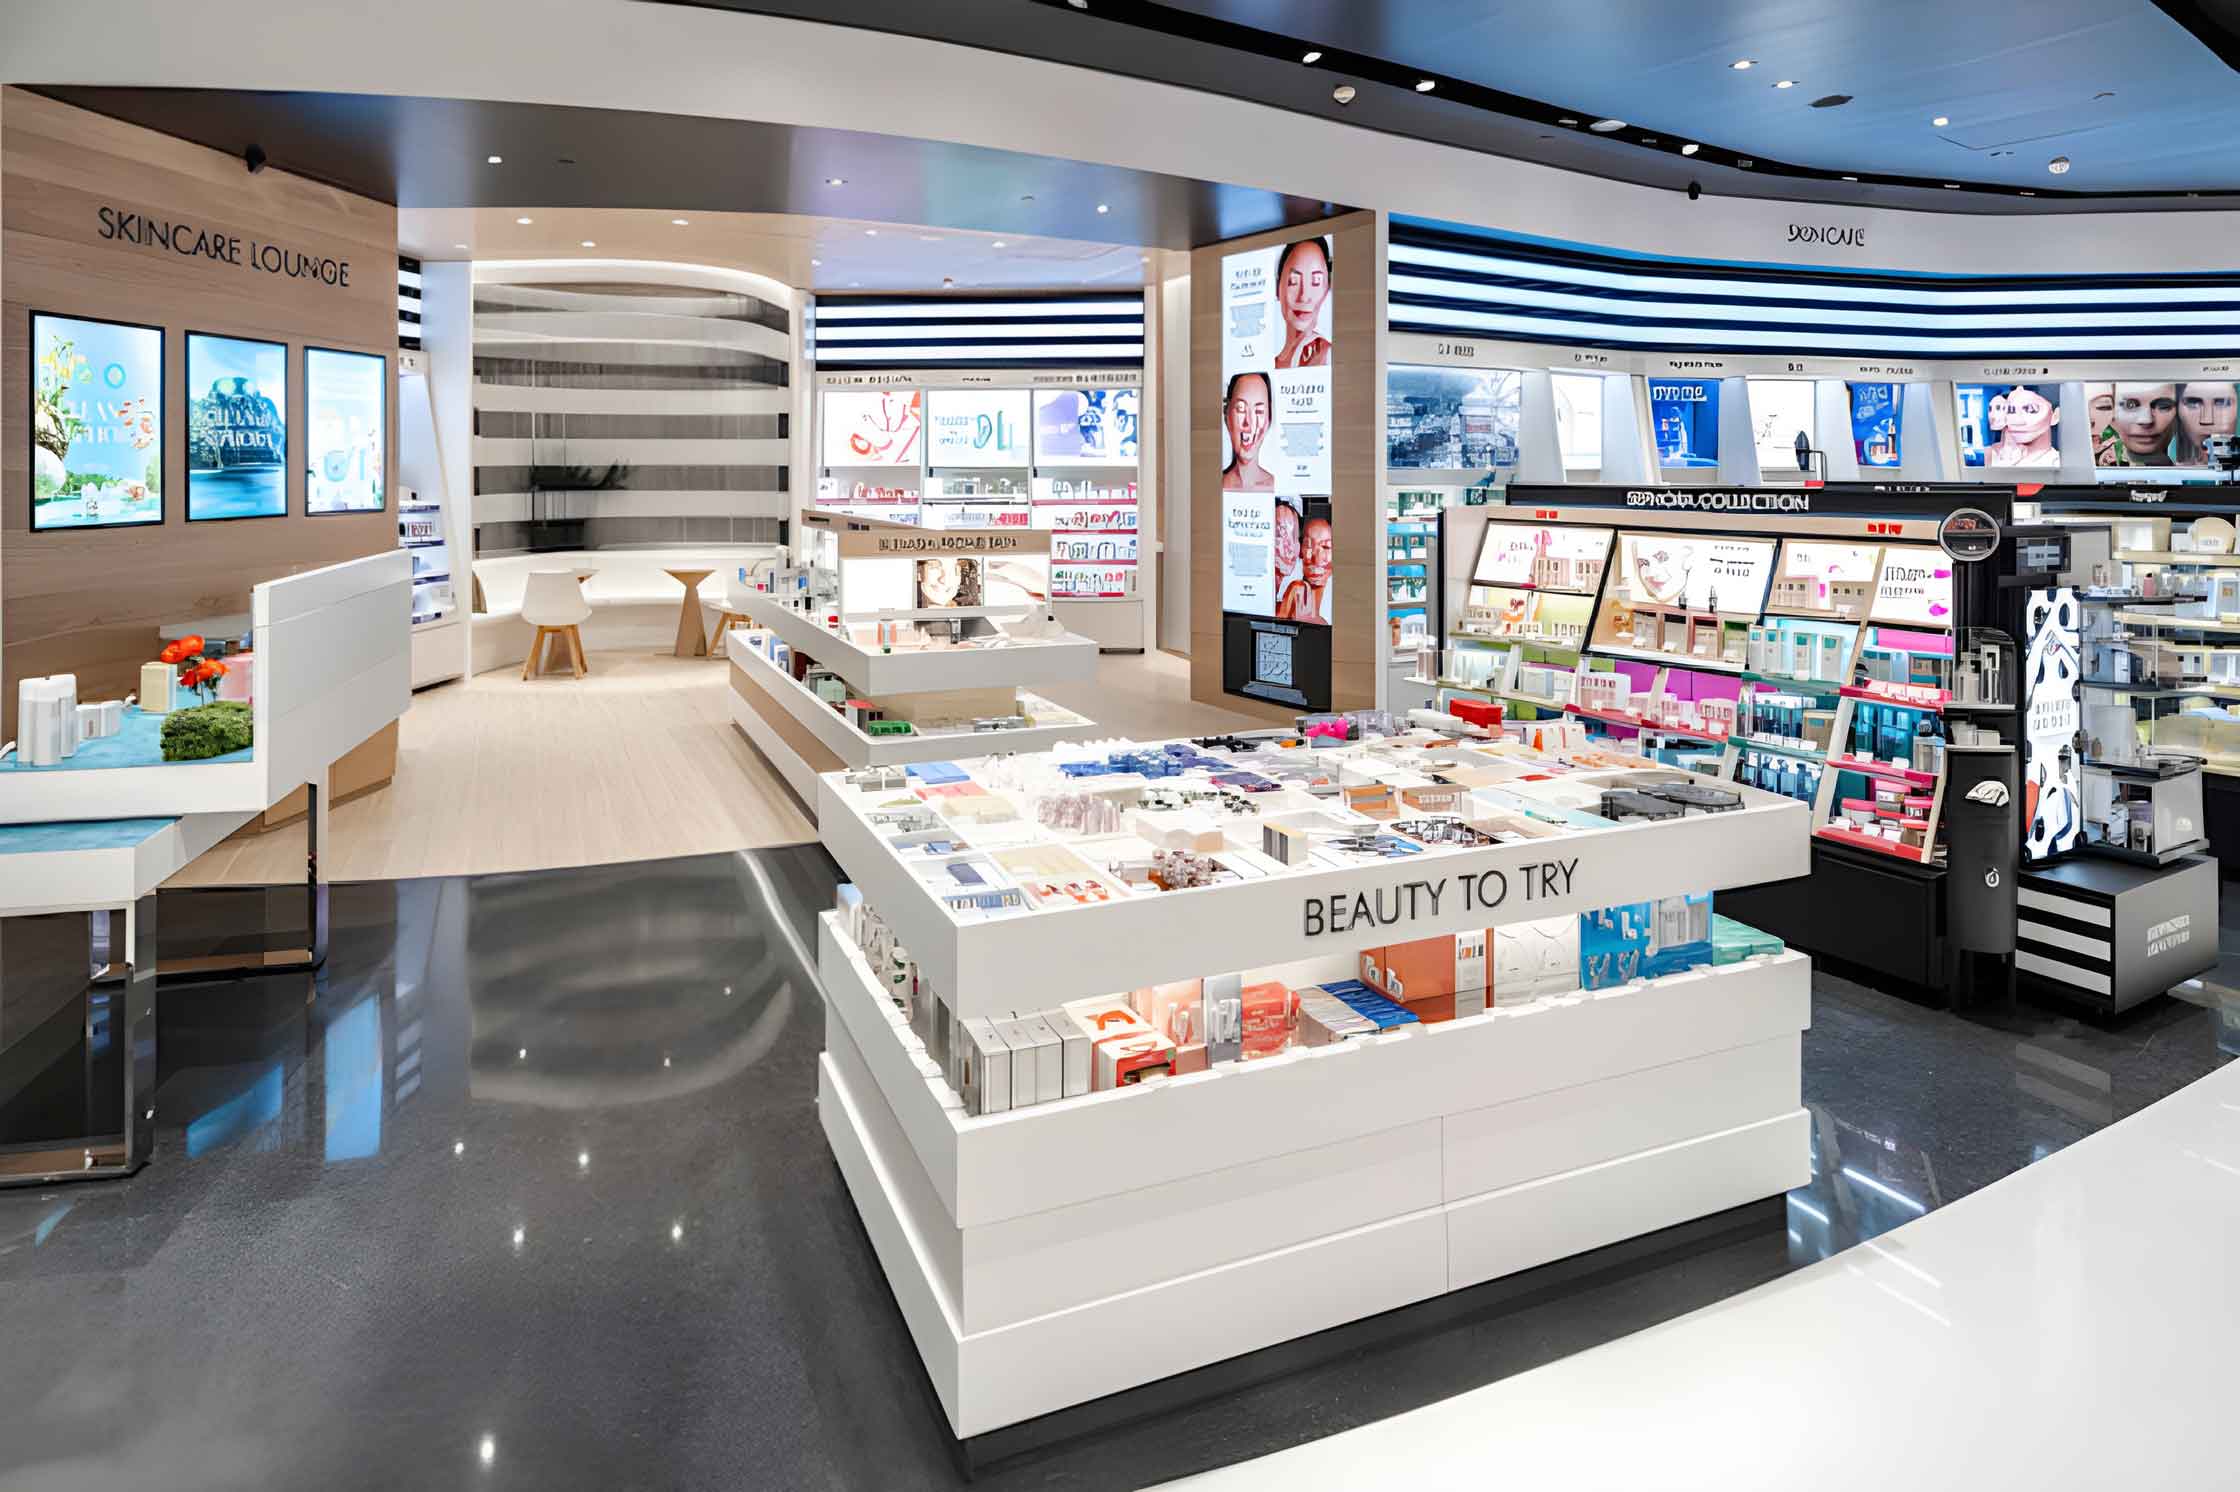 Inside Sephora store- Beauty cosmetics on display